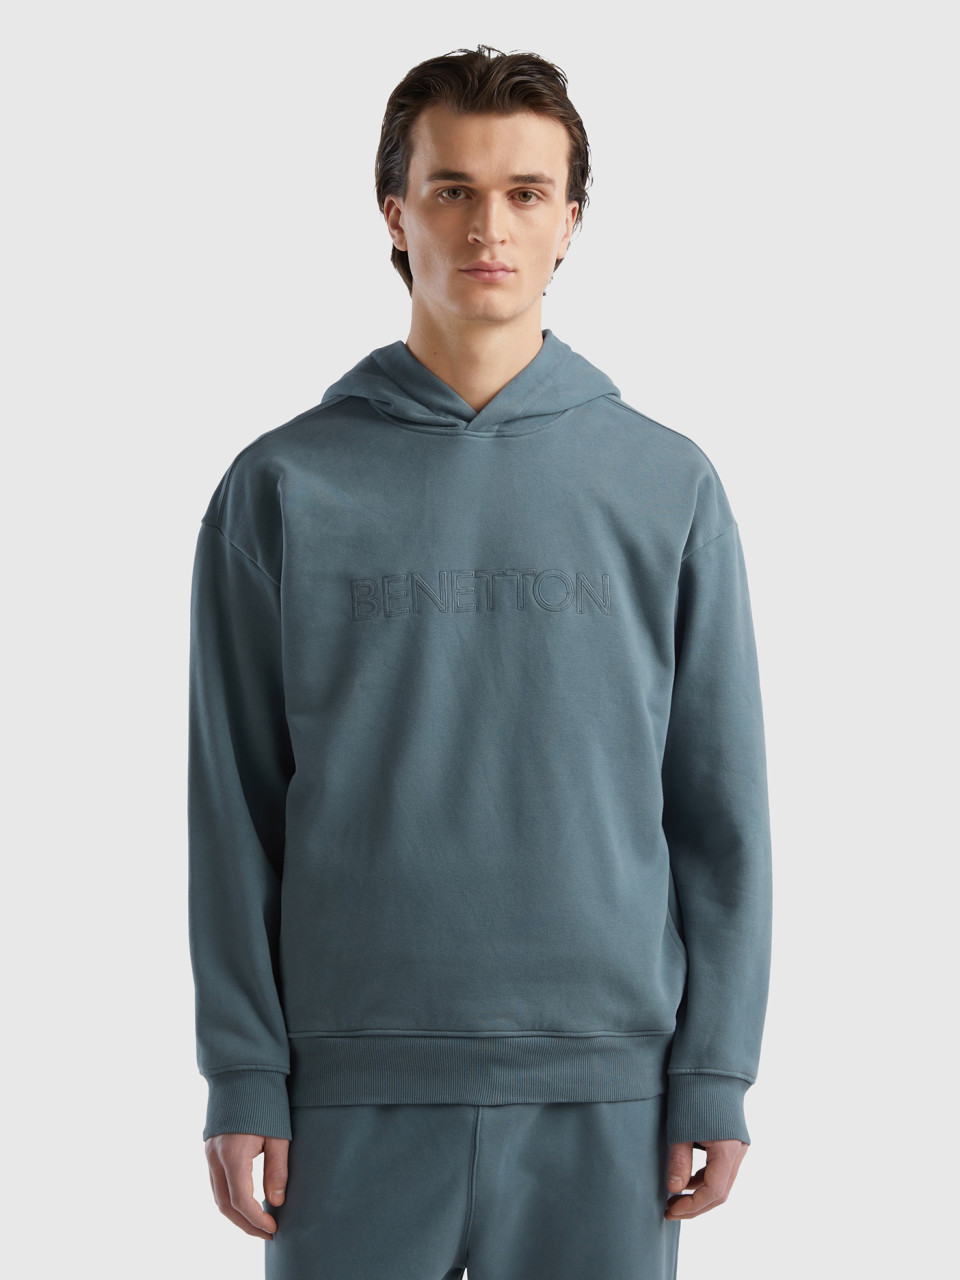 Benetton, Sweatshirt With Embroidery In Organic Cotton Blend, Dark Gray, Men